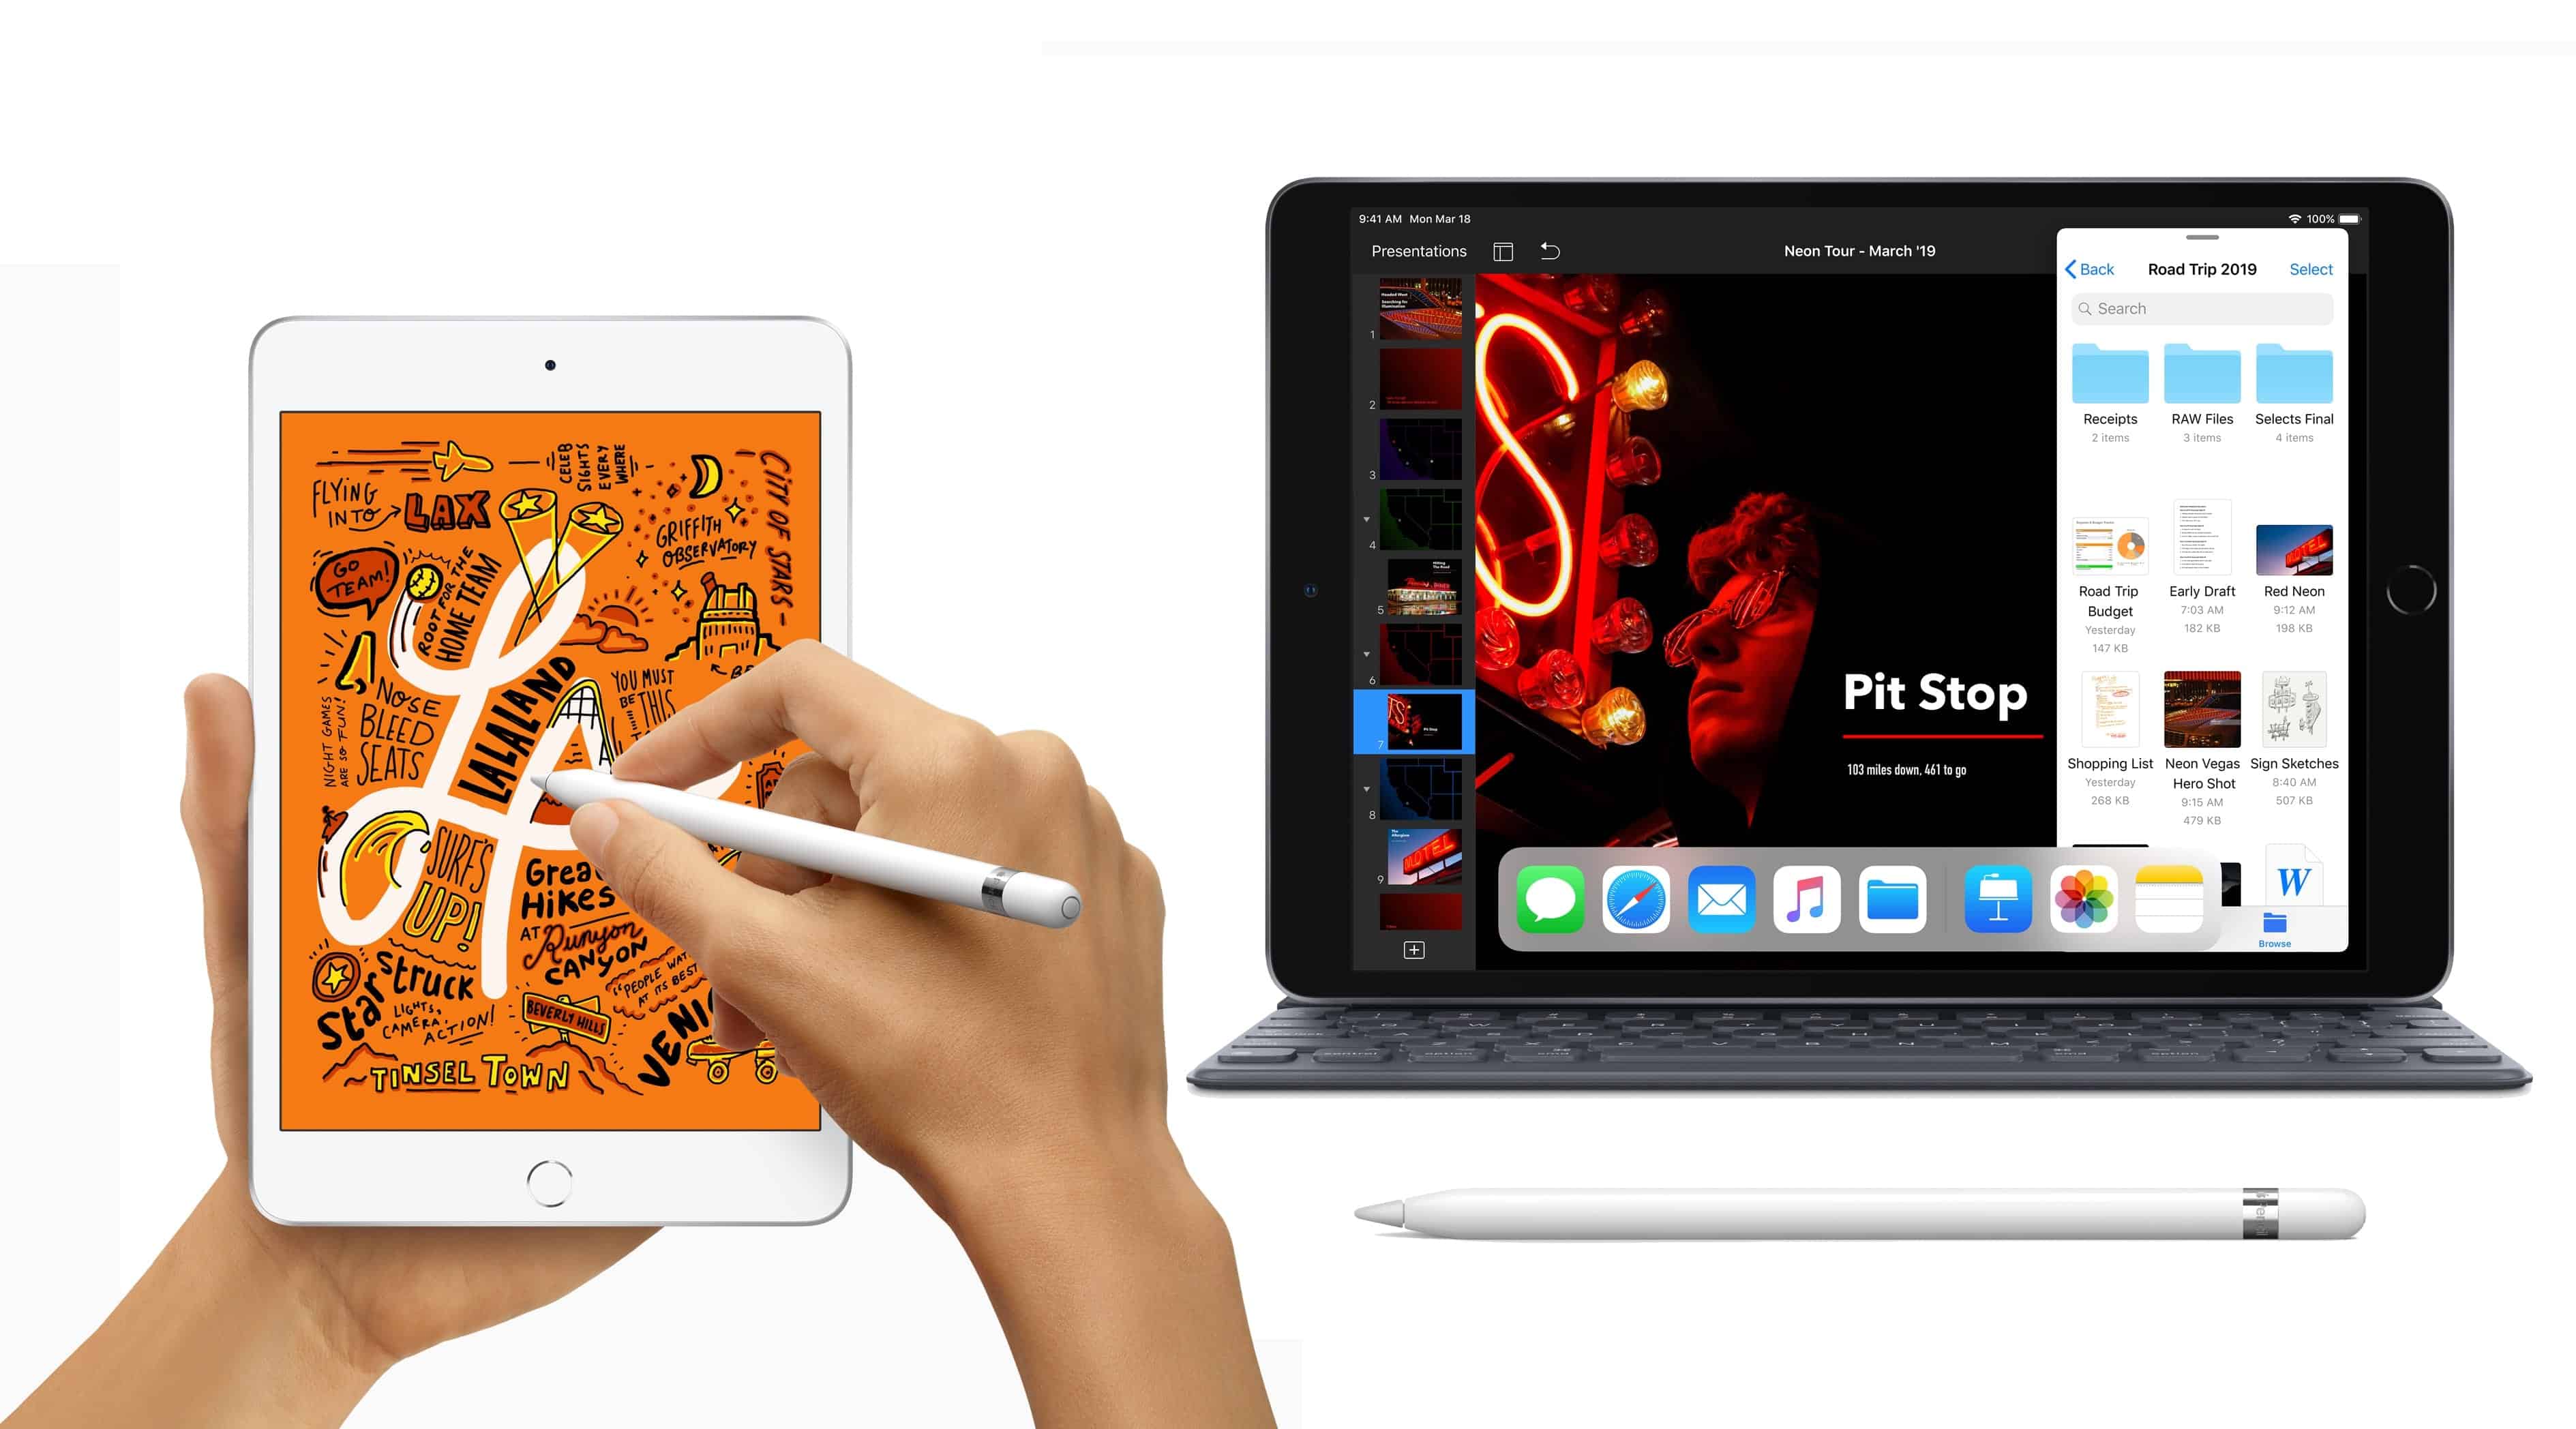 2019 iPad mini and 2019 iPad Air